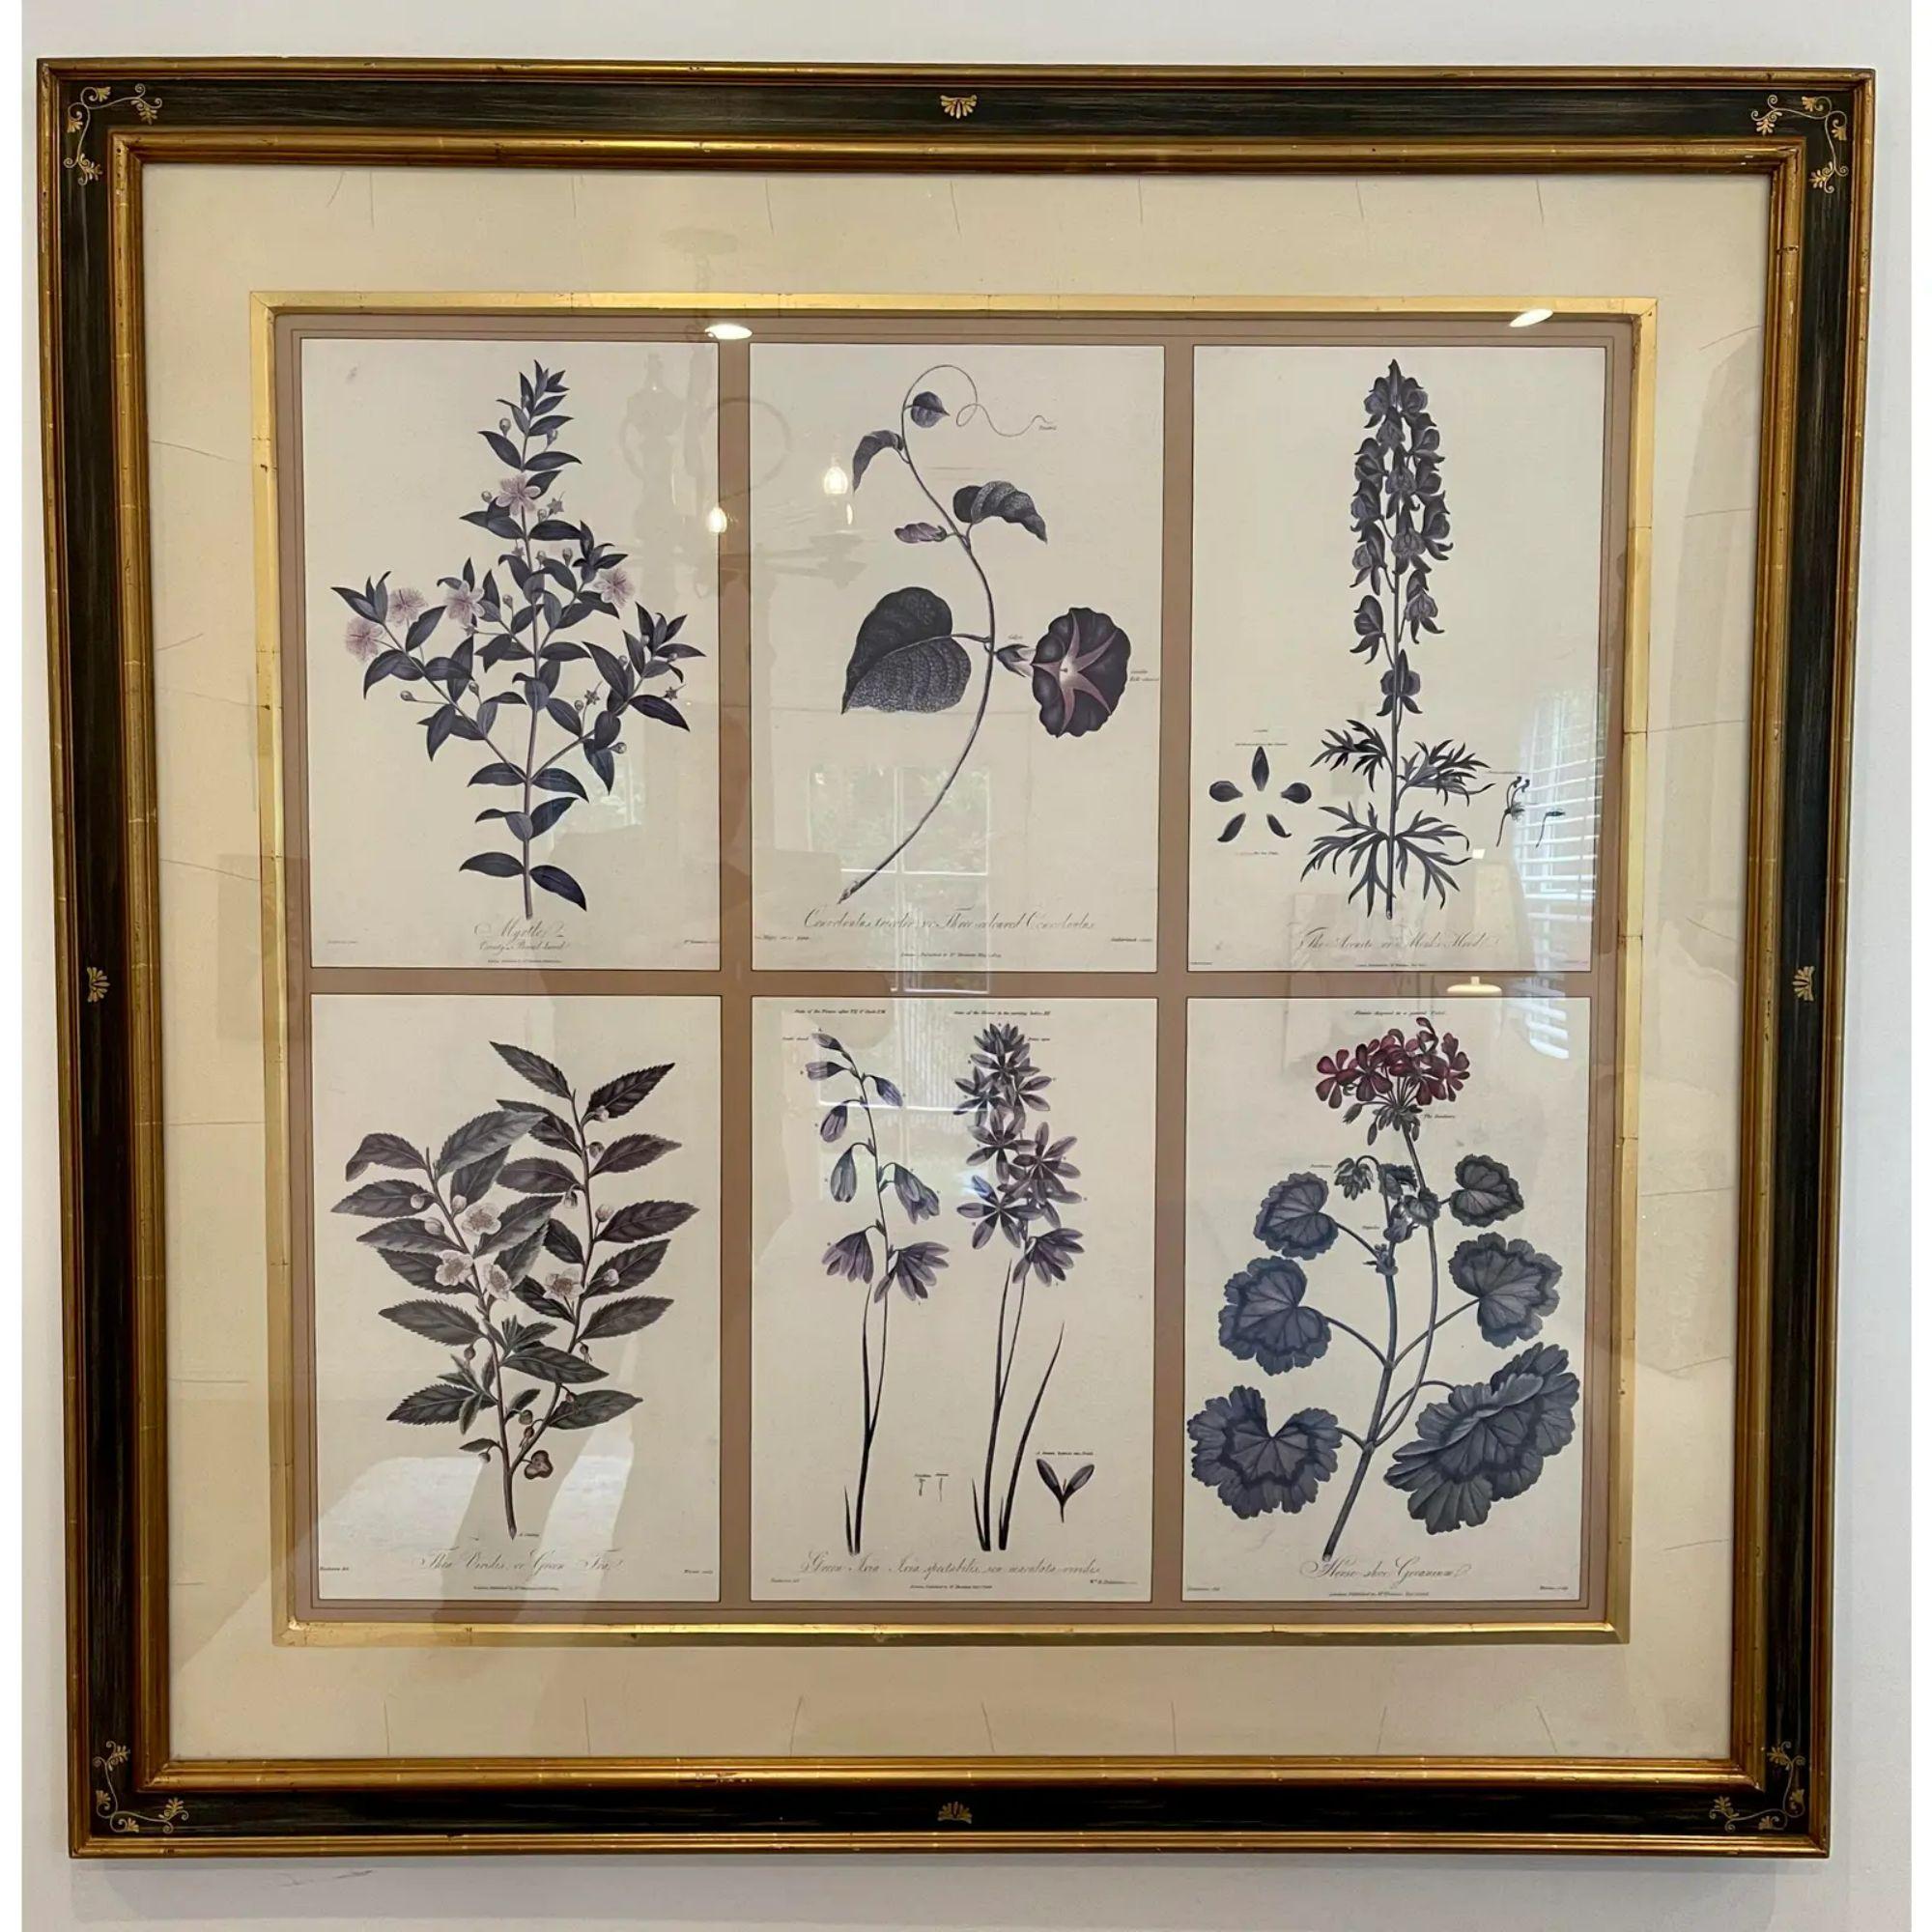 Guy Chaddock home set of 6botanical prints in black & gold chonoiserie frame. Each print measures 12